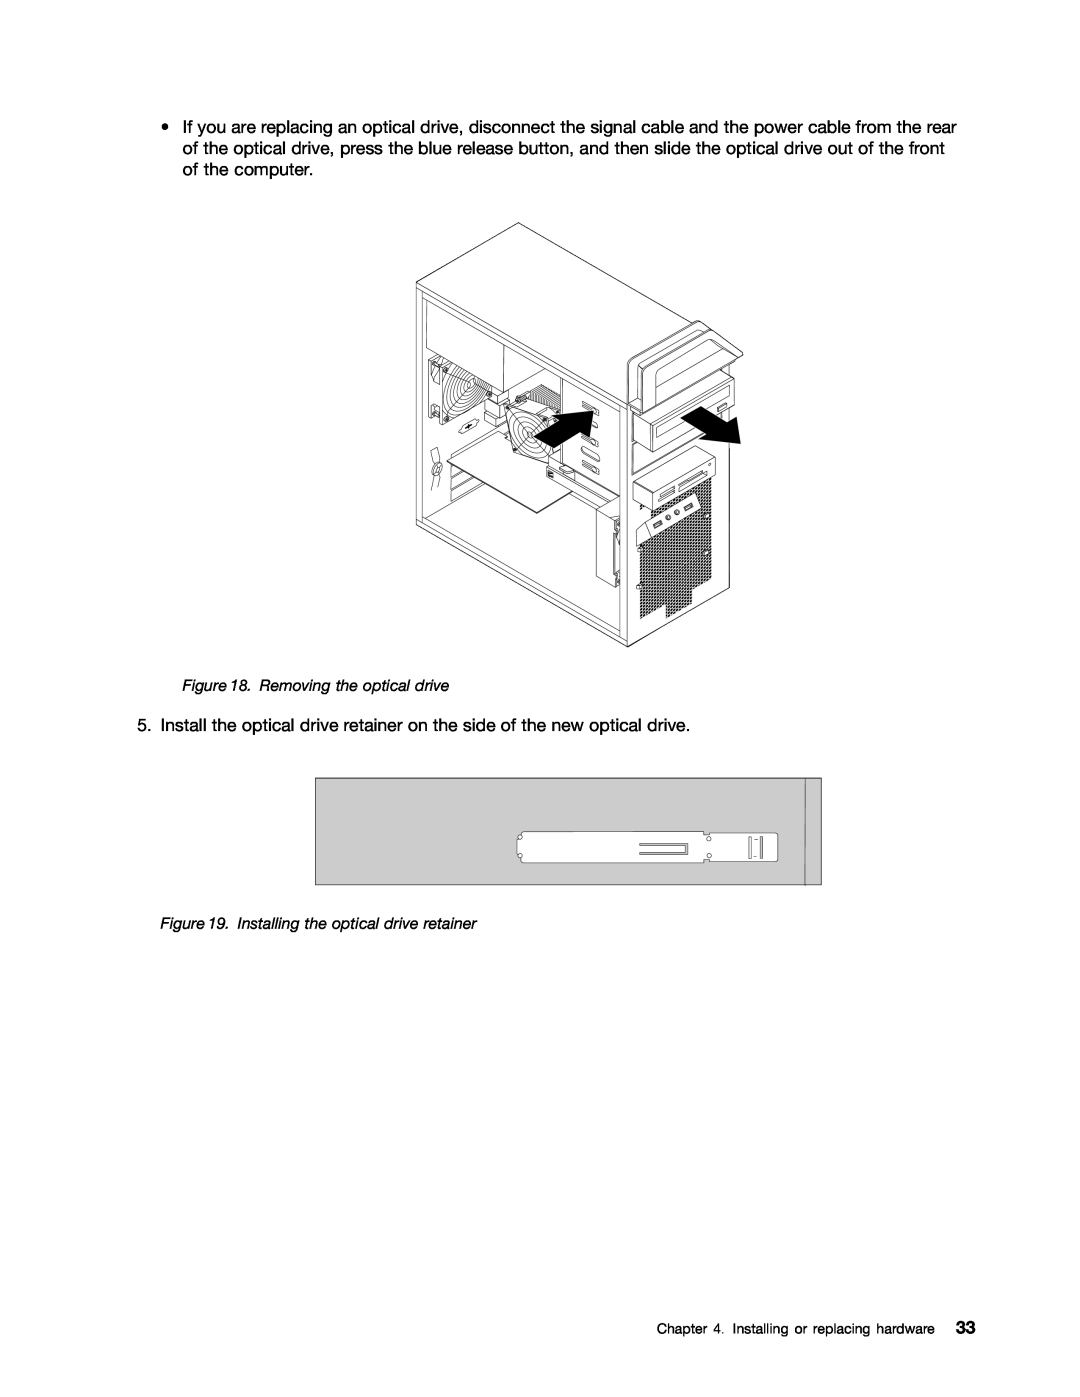 Lenovo 7783, 7782, 7824, 7823, 7821 manual Removing the optical drive, Installing the optical drive retainer 